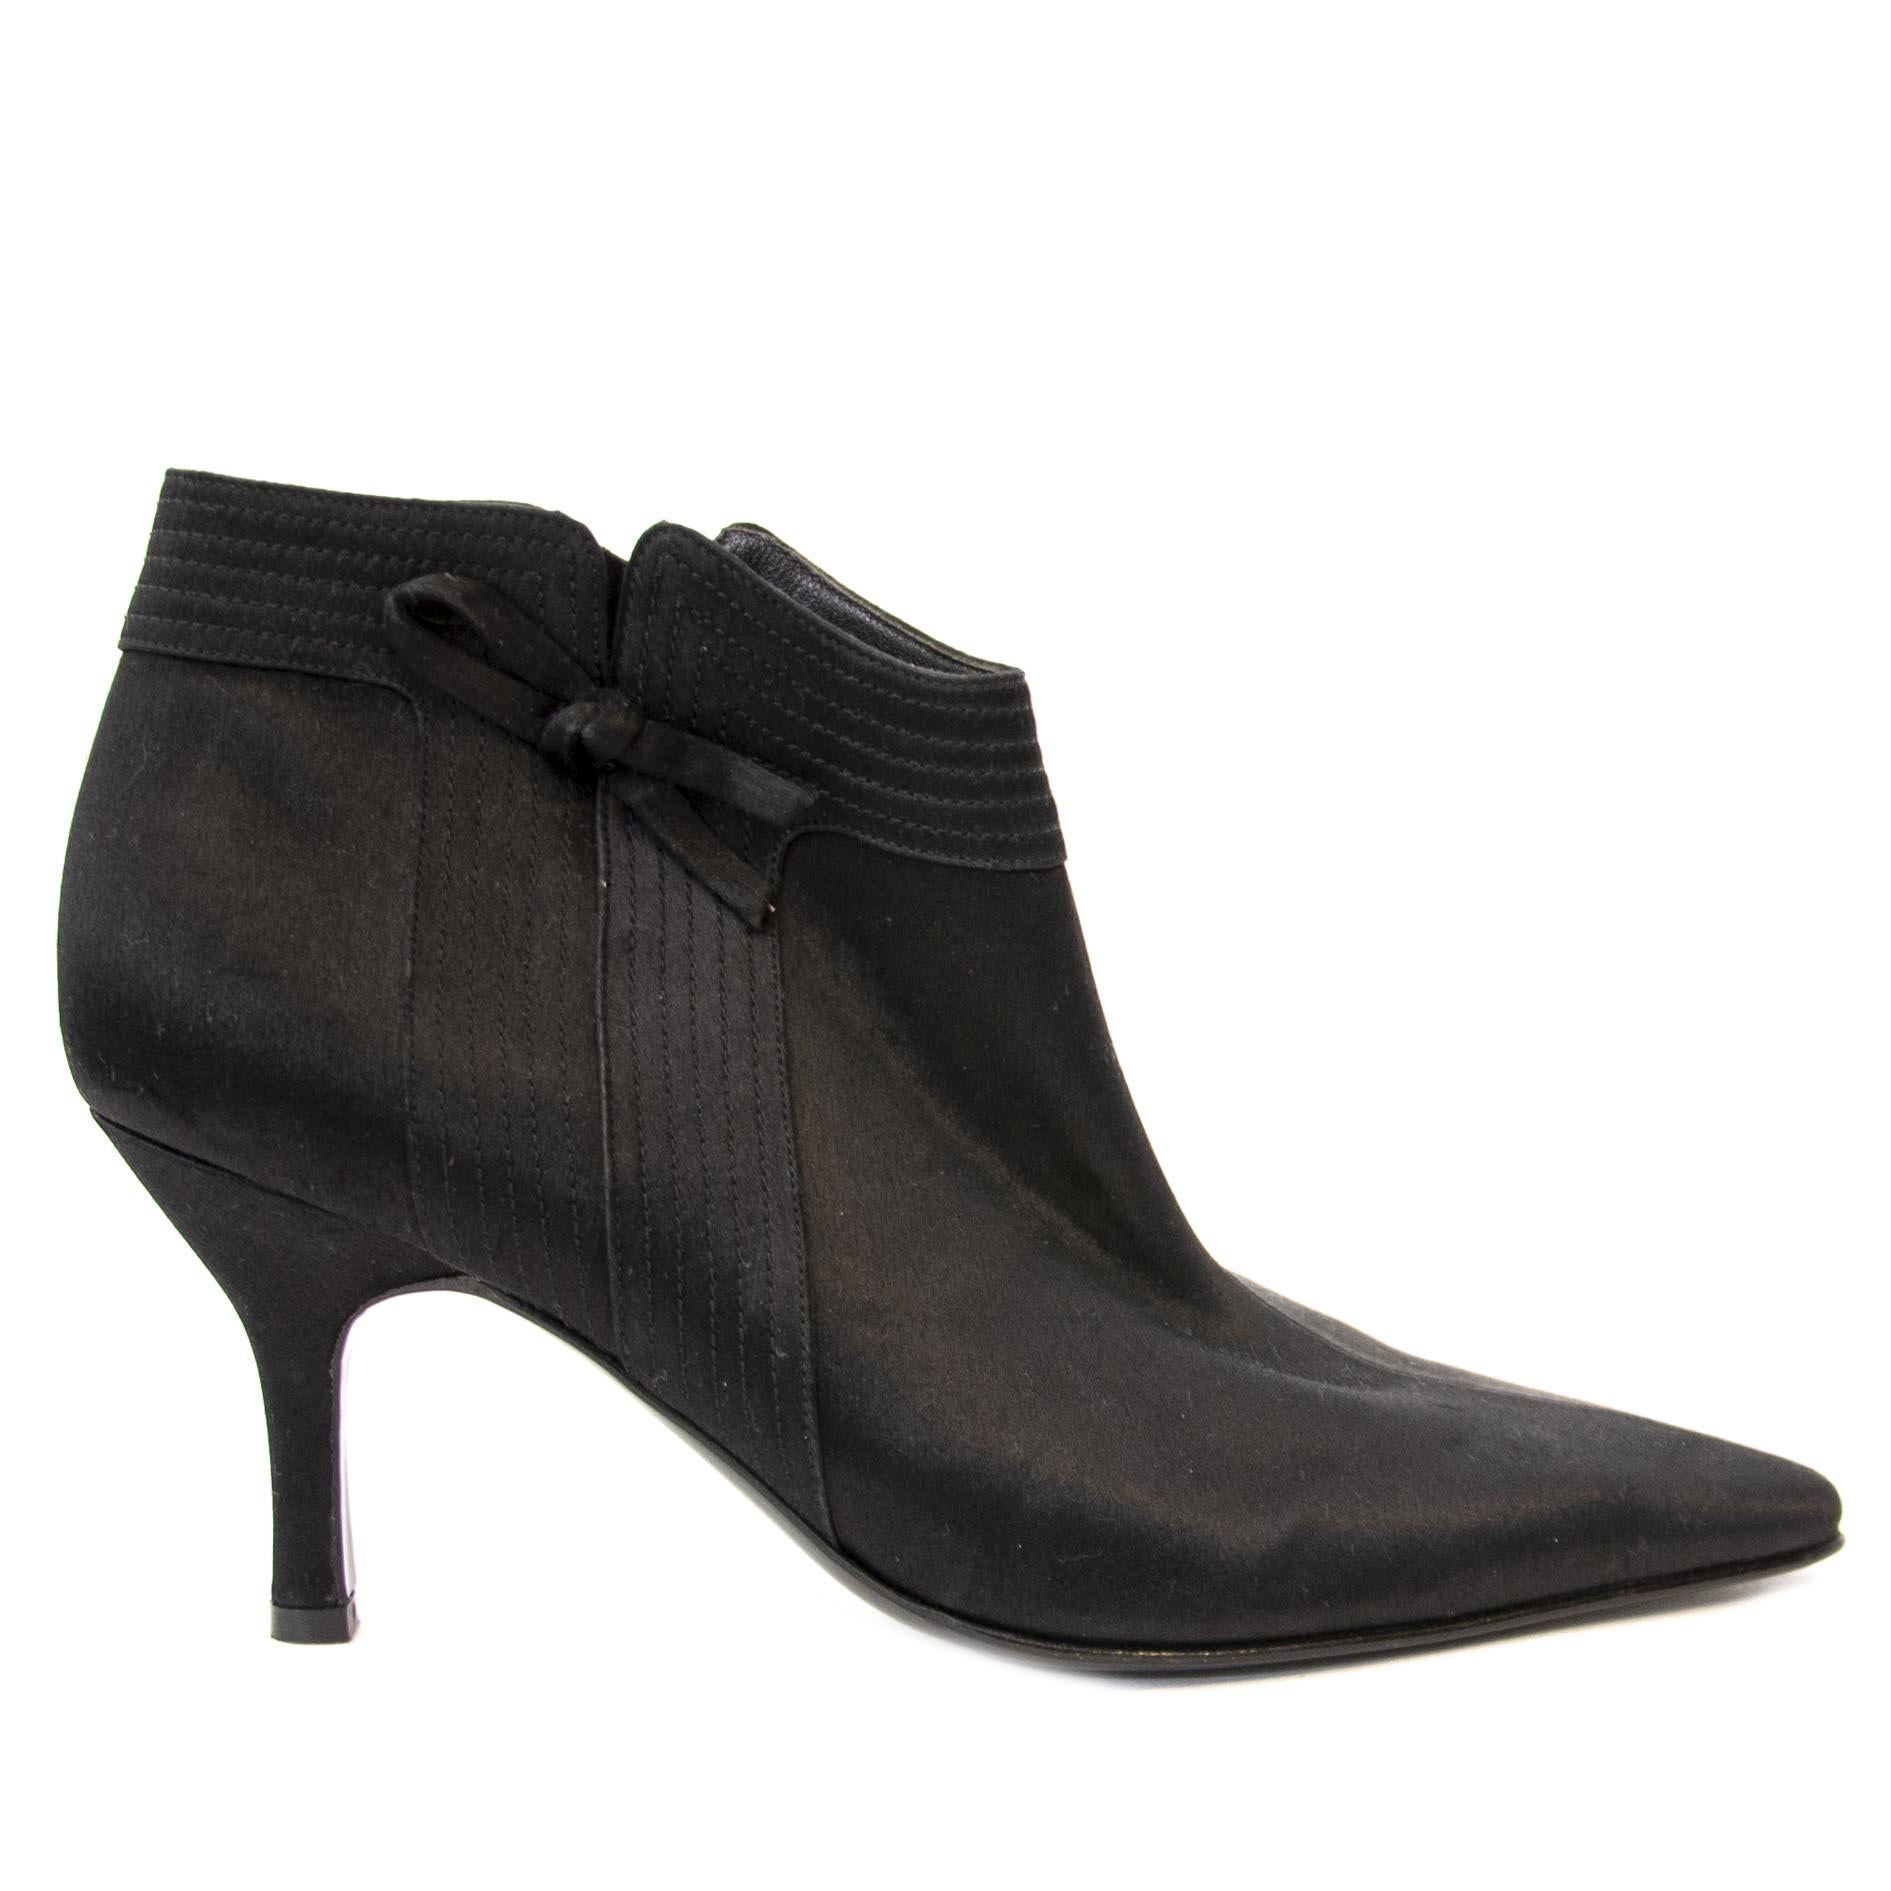 Women's Salvatore Ferragamo Black Satin Ankle Boots - Size 36.5